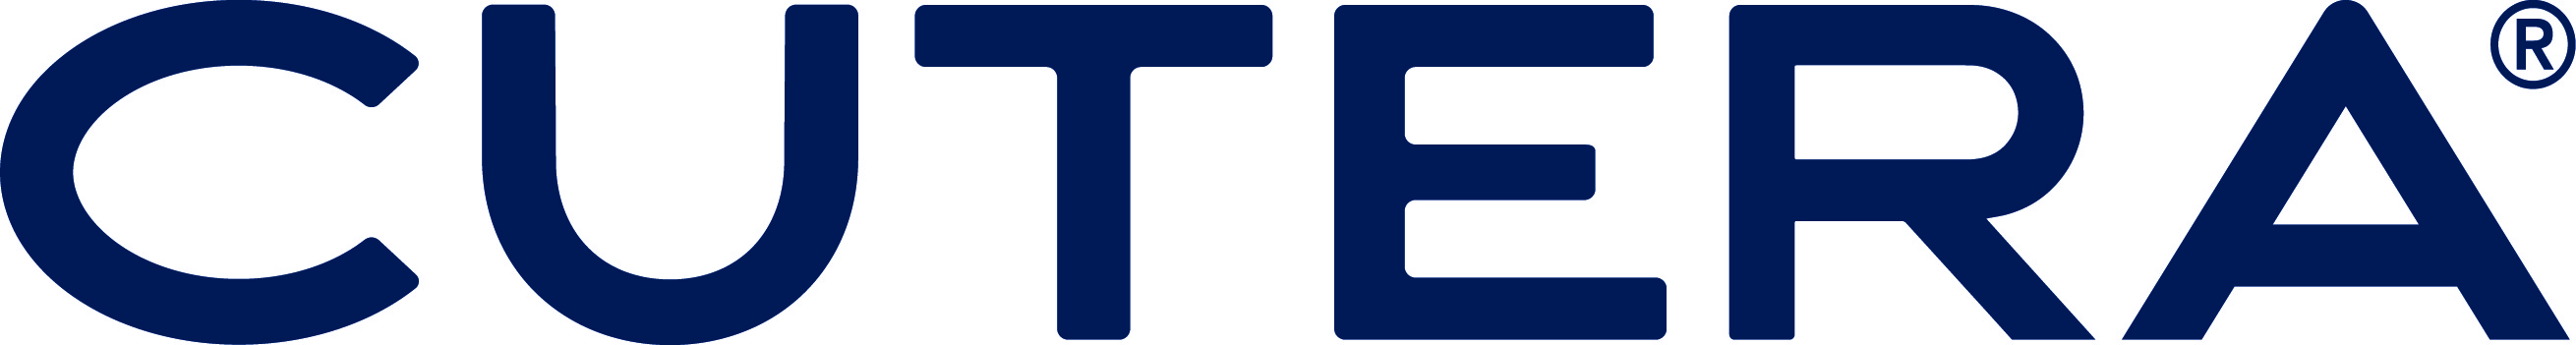 Cutera-Logo_CMYK-Navy.jpg